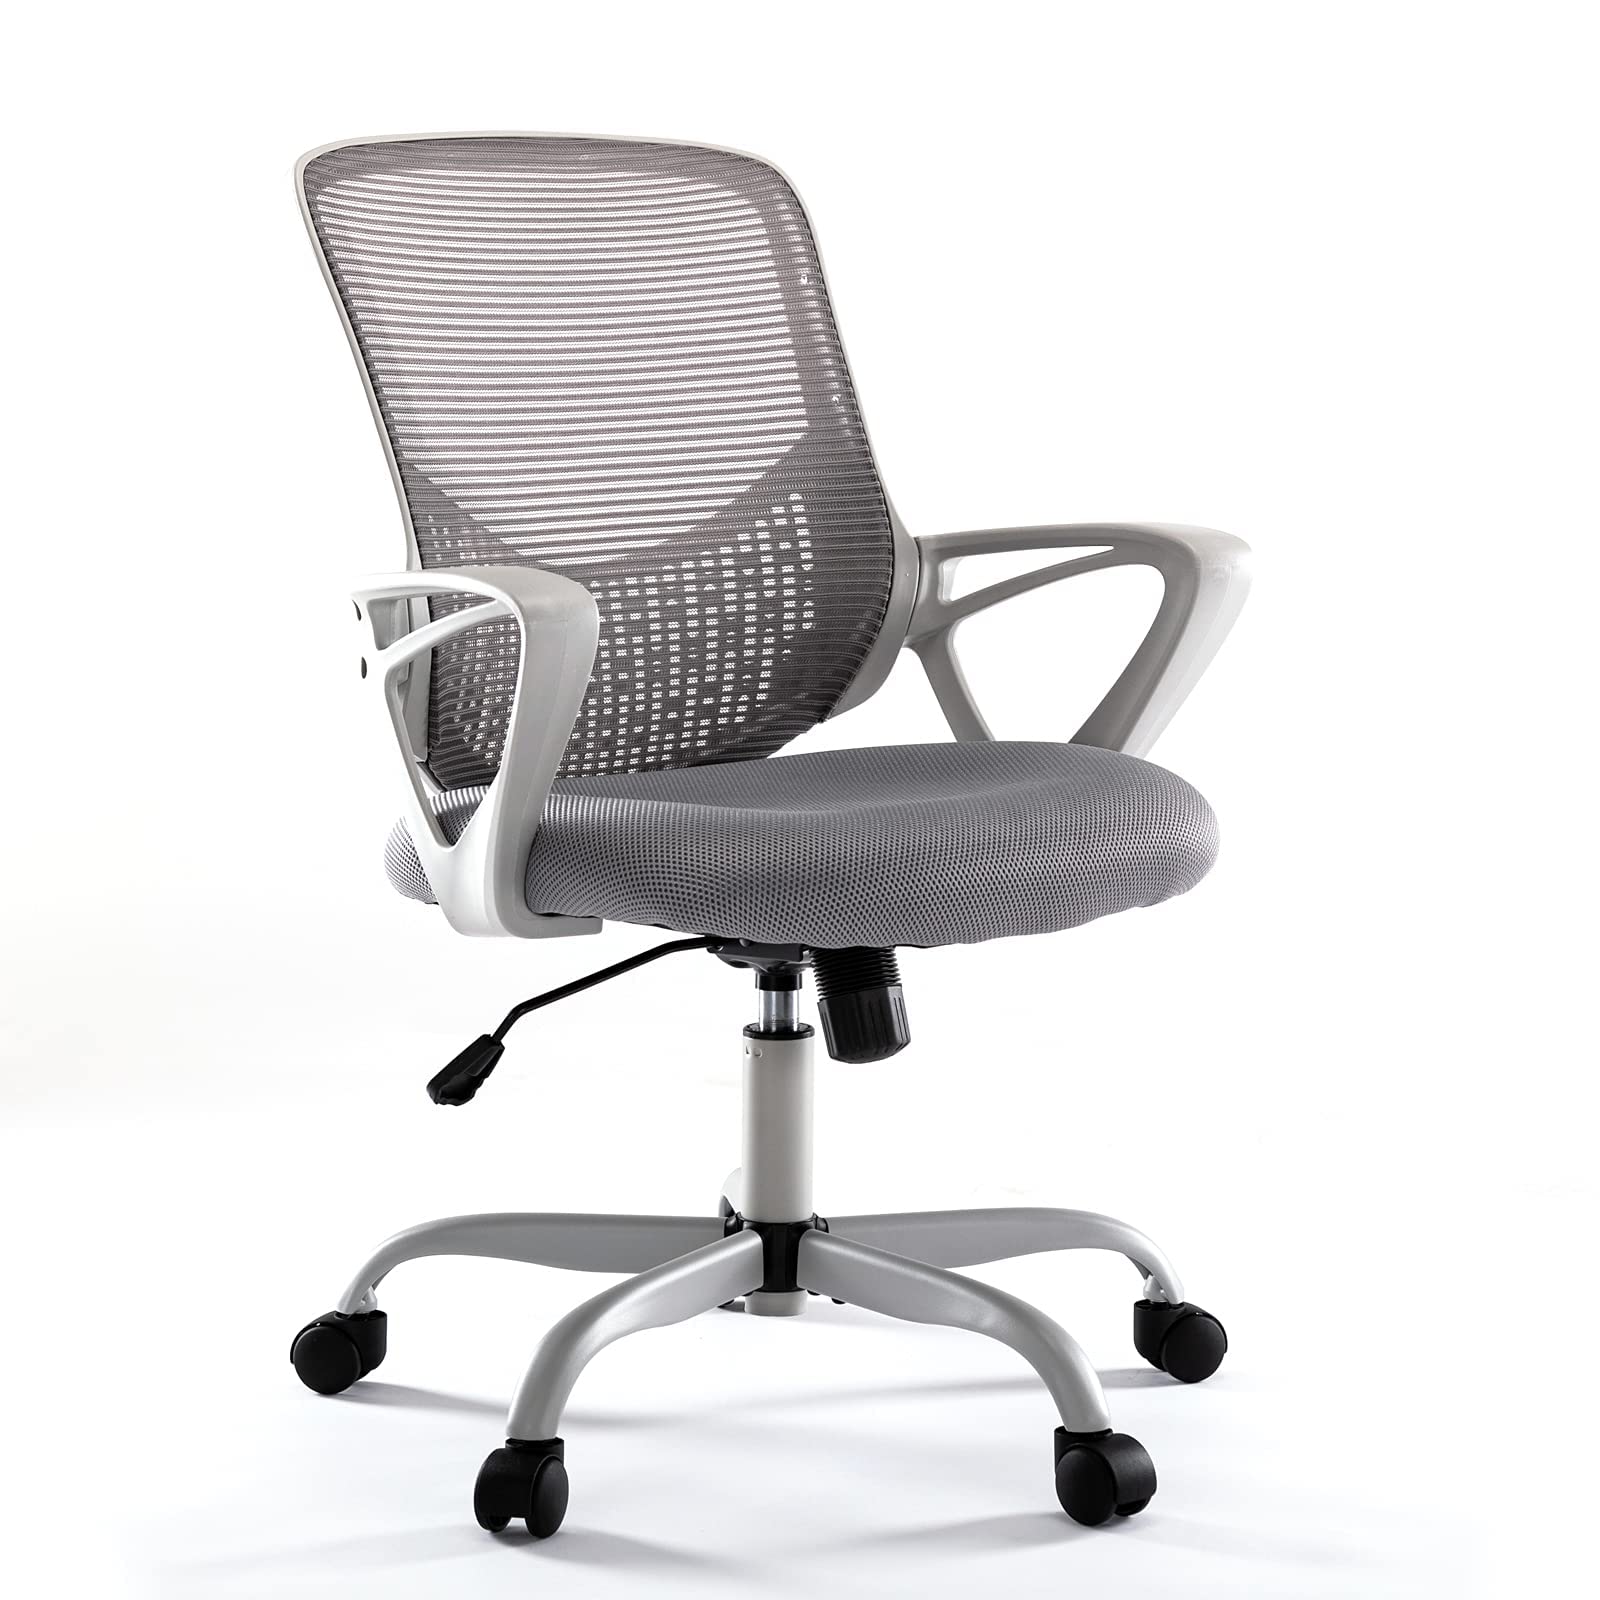 Smug Home Office Ergonomic Computer Desk Mesh Chair Adjustable Swivels w/ Armrest (Grey) $41.07 + Free Shipping